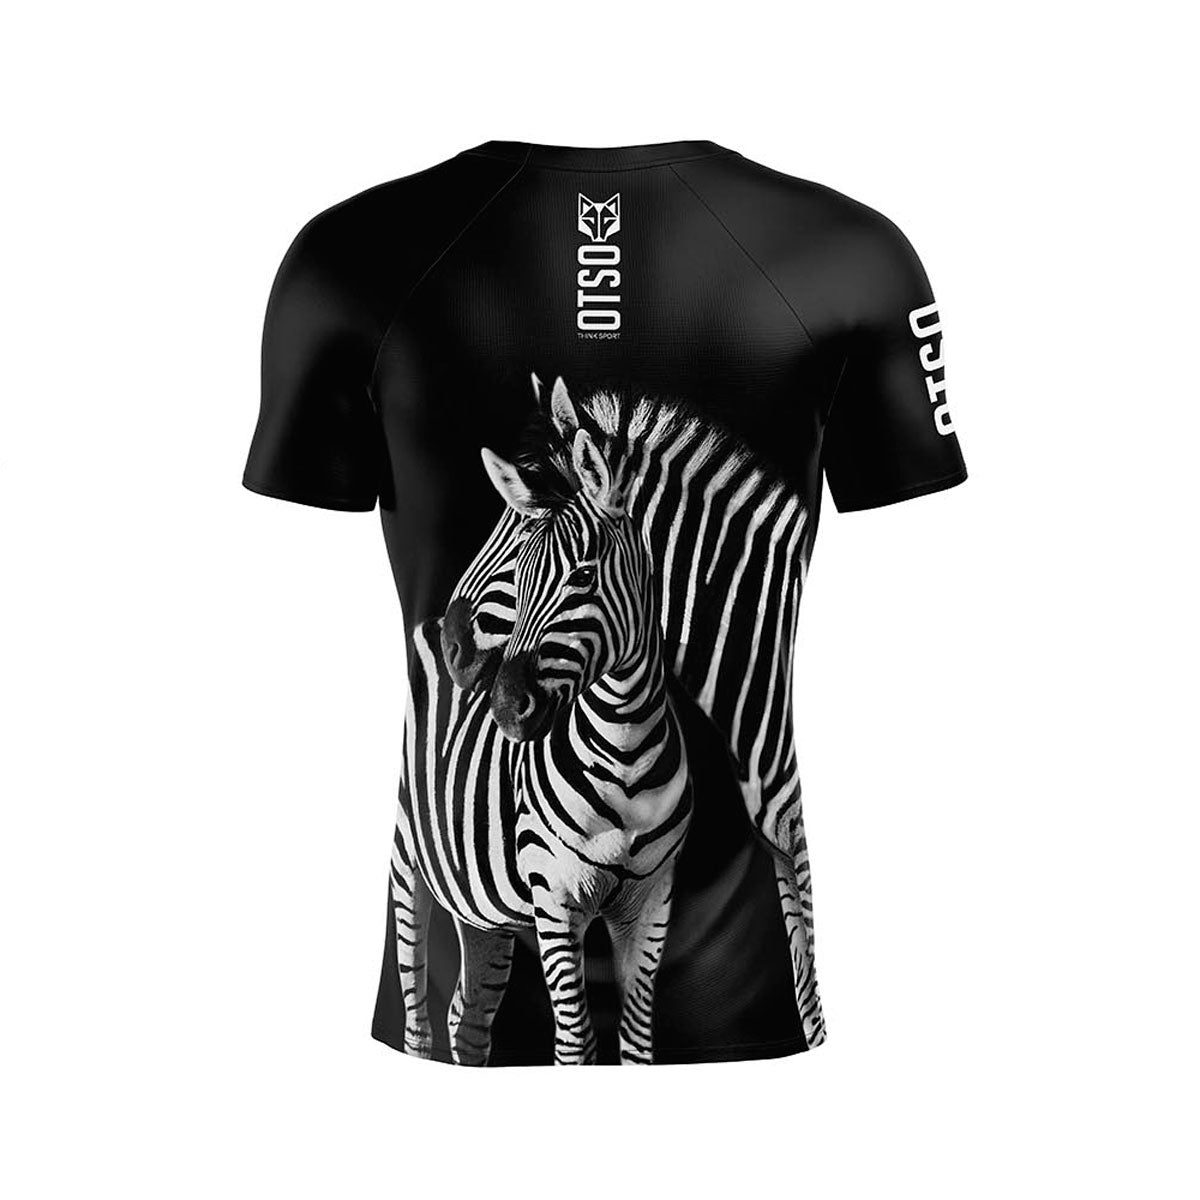 Samarreta màniga curta home - Zebra